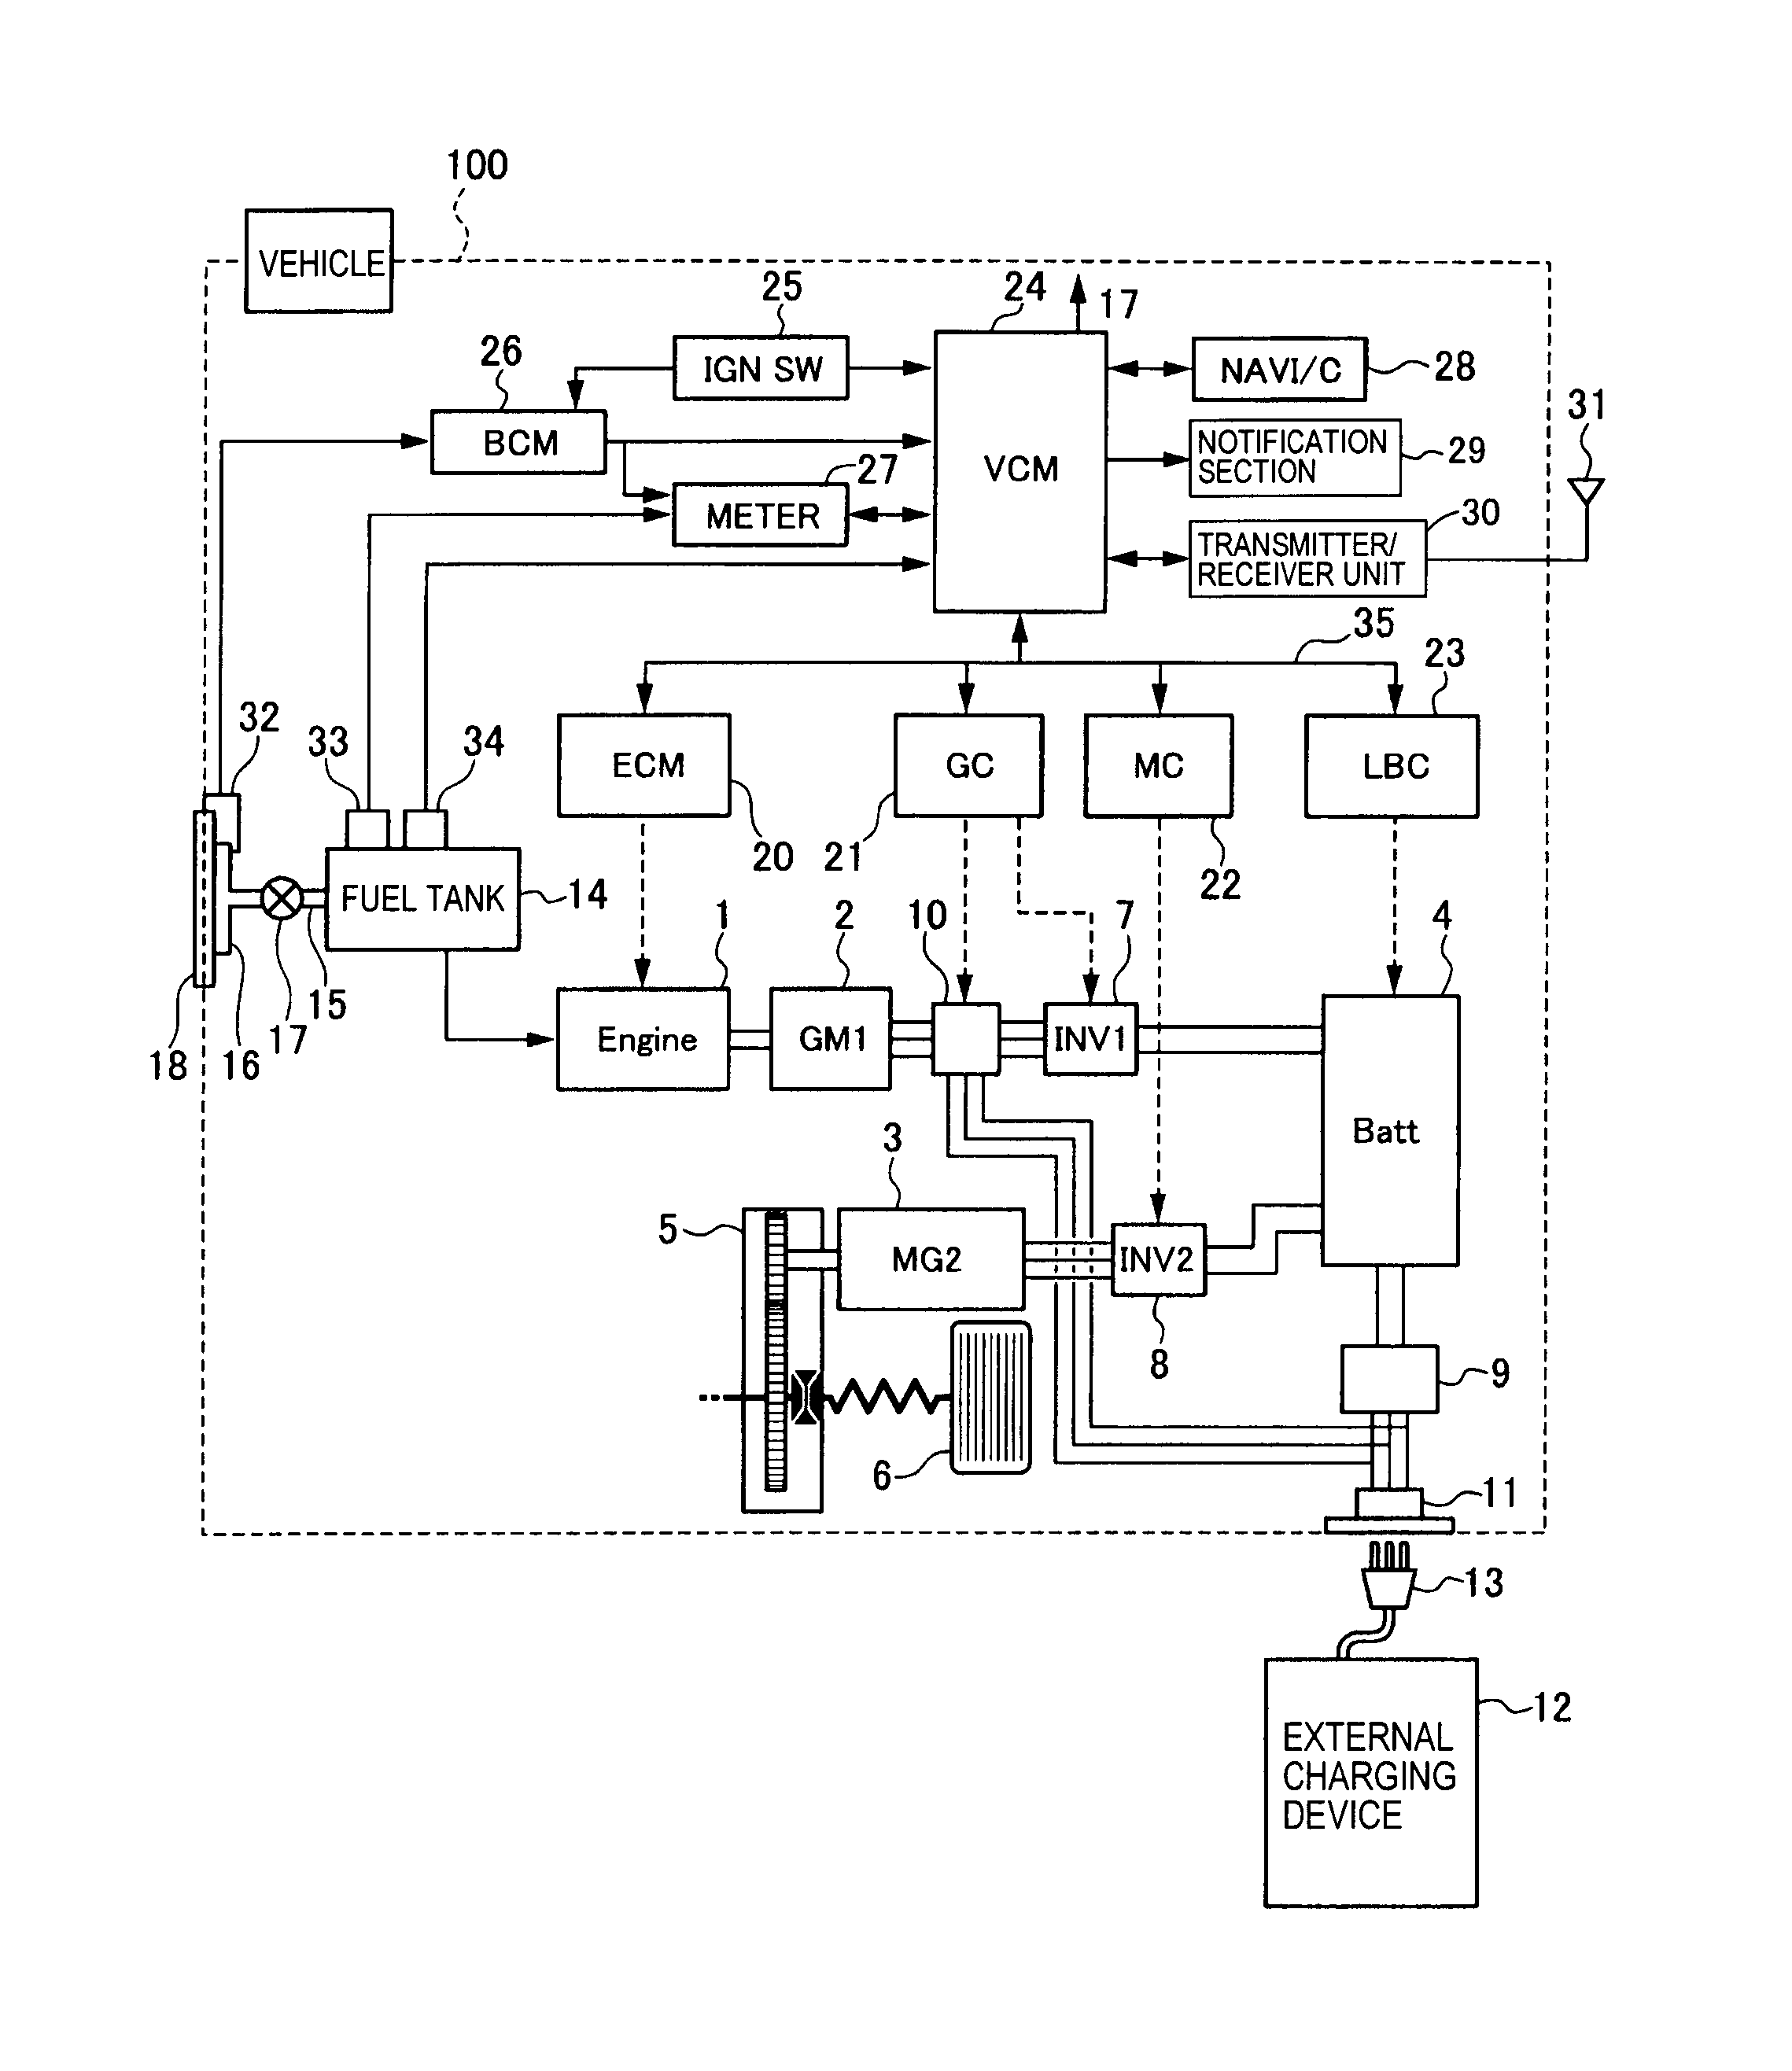 lithonia ibg wiring diagram